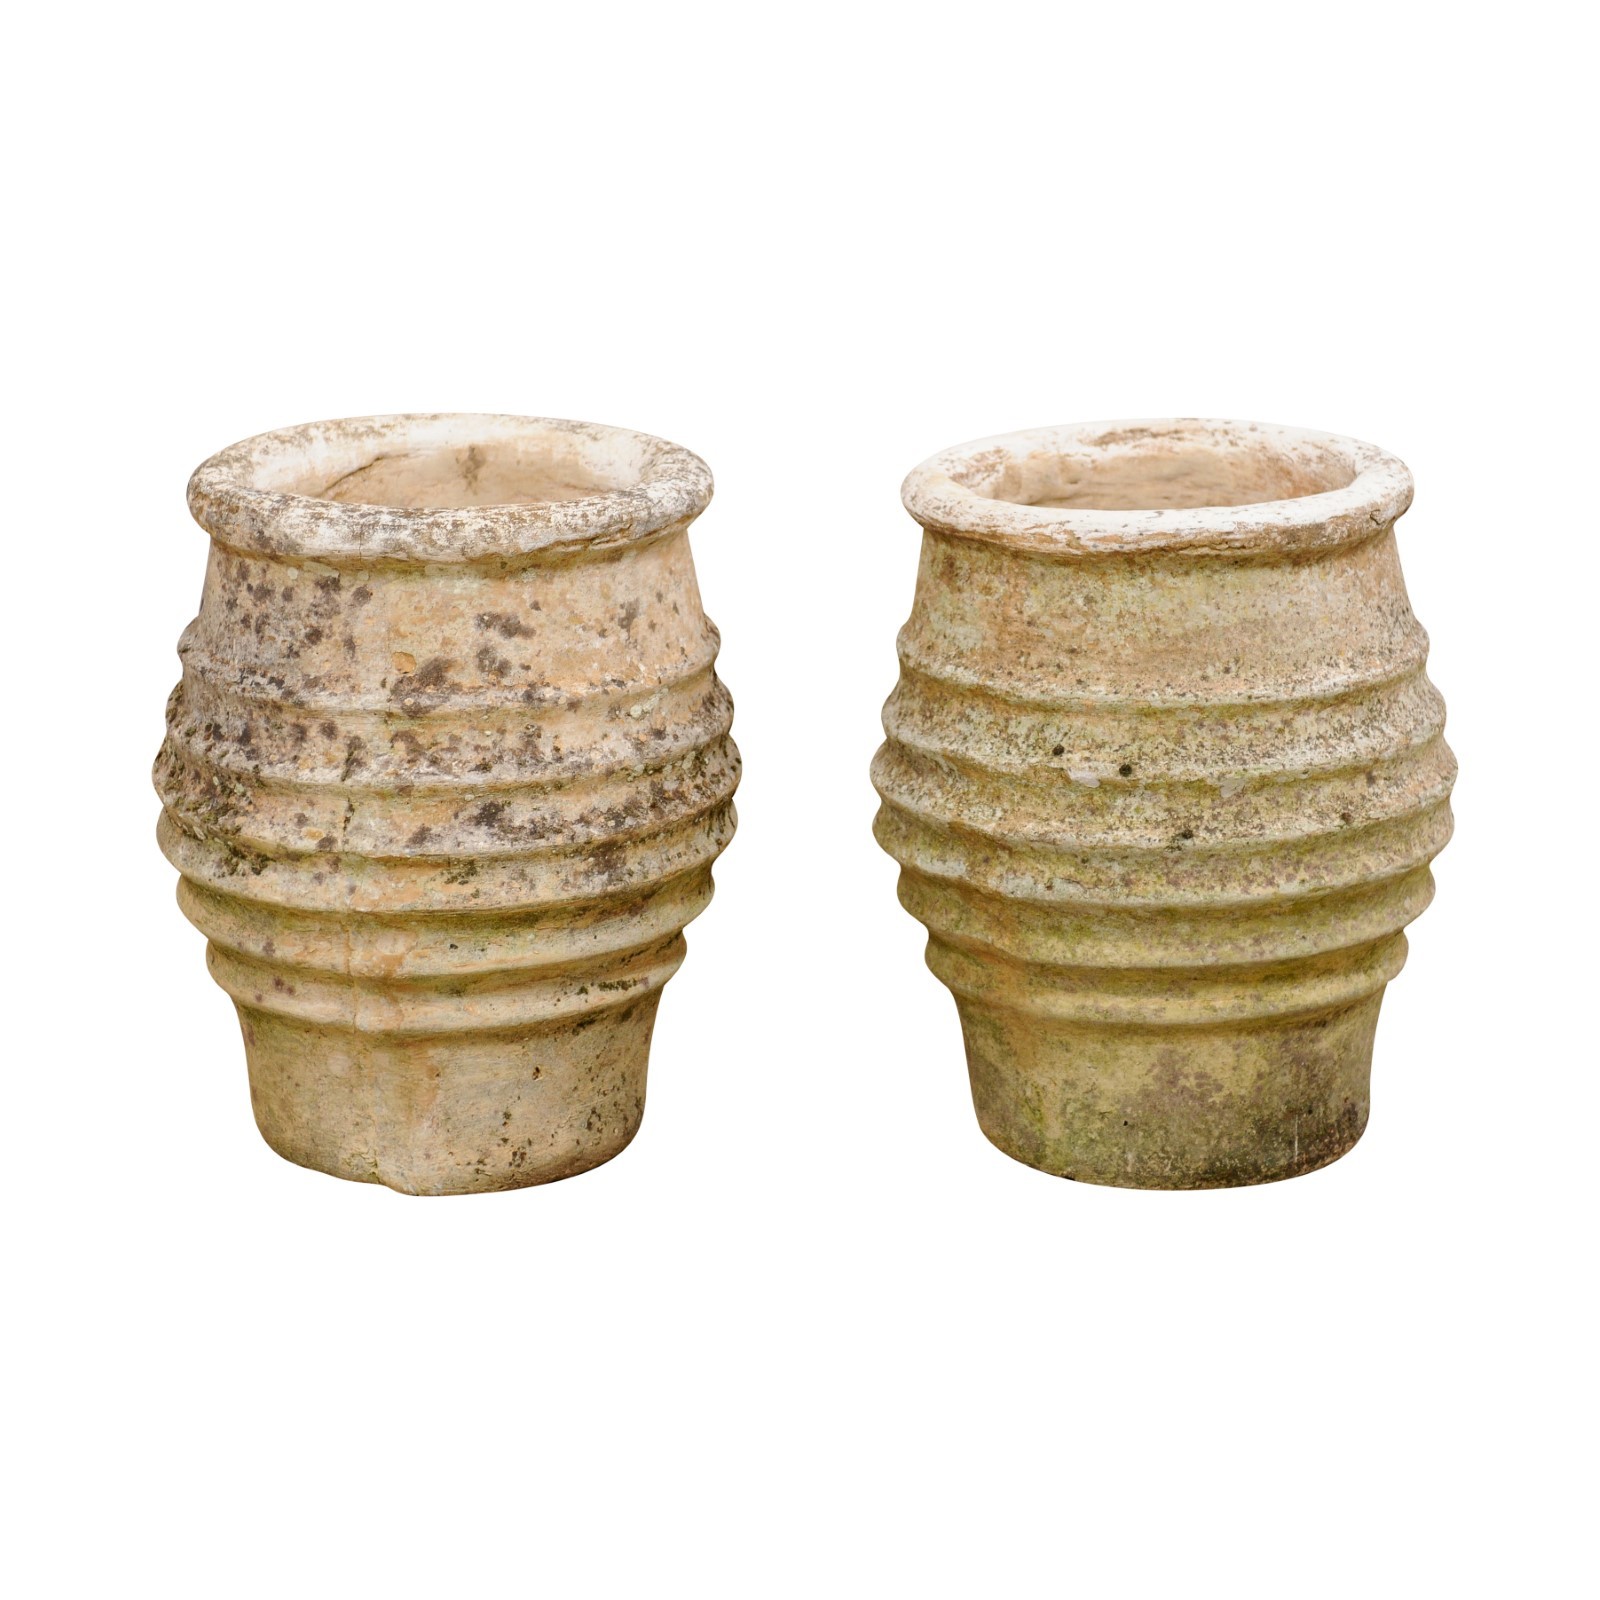 Pair of Spanish 19th C. Pots, 13.5" Tall